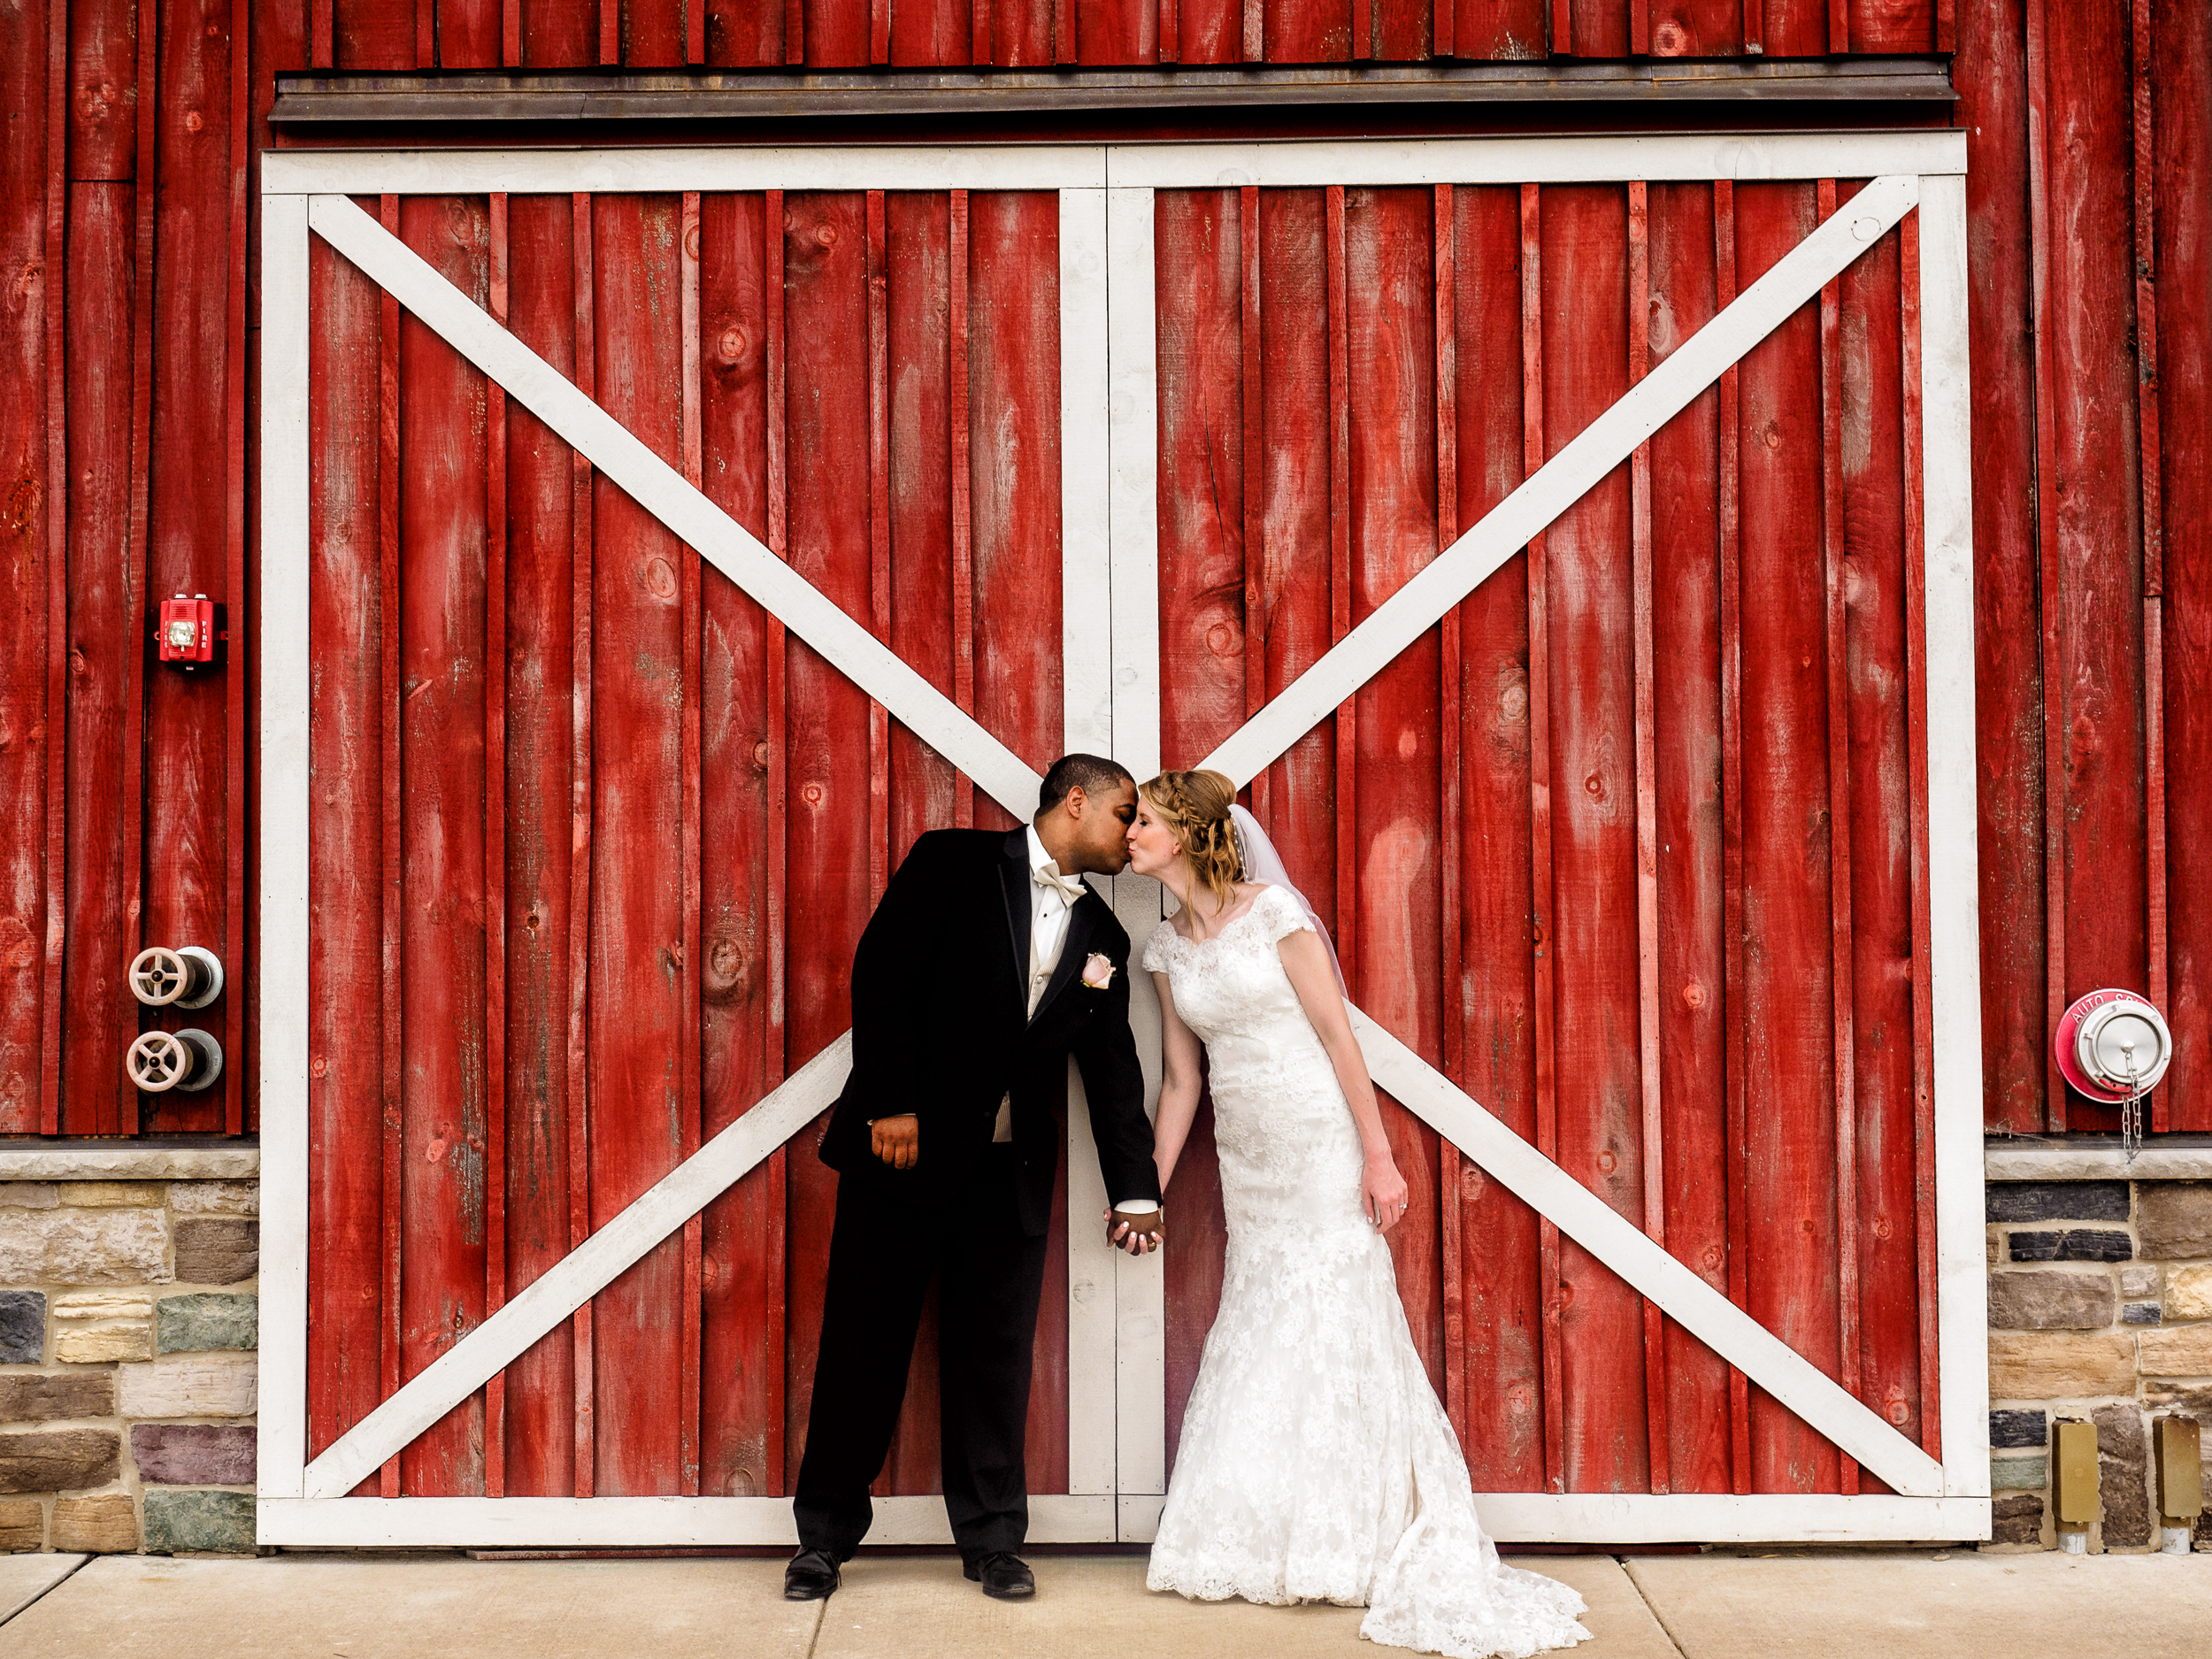 County Line Orchard Wedding Venue - Northwest Indiana Wedding Photographer Region Weddings